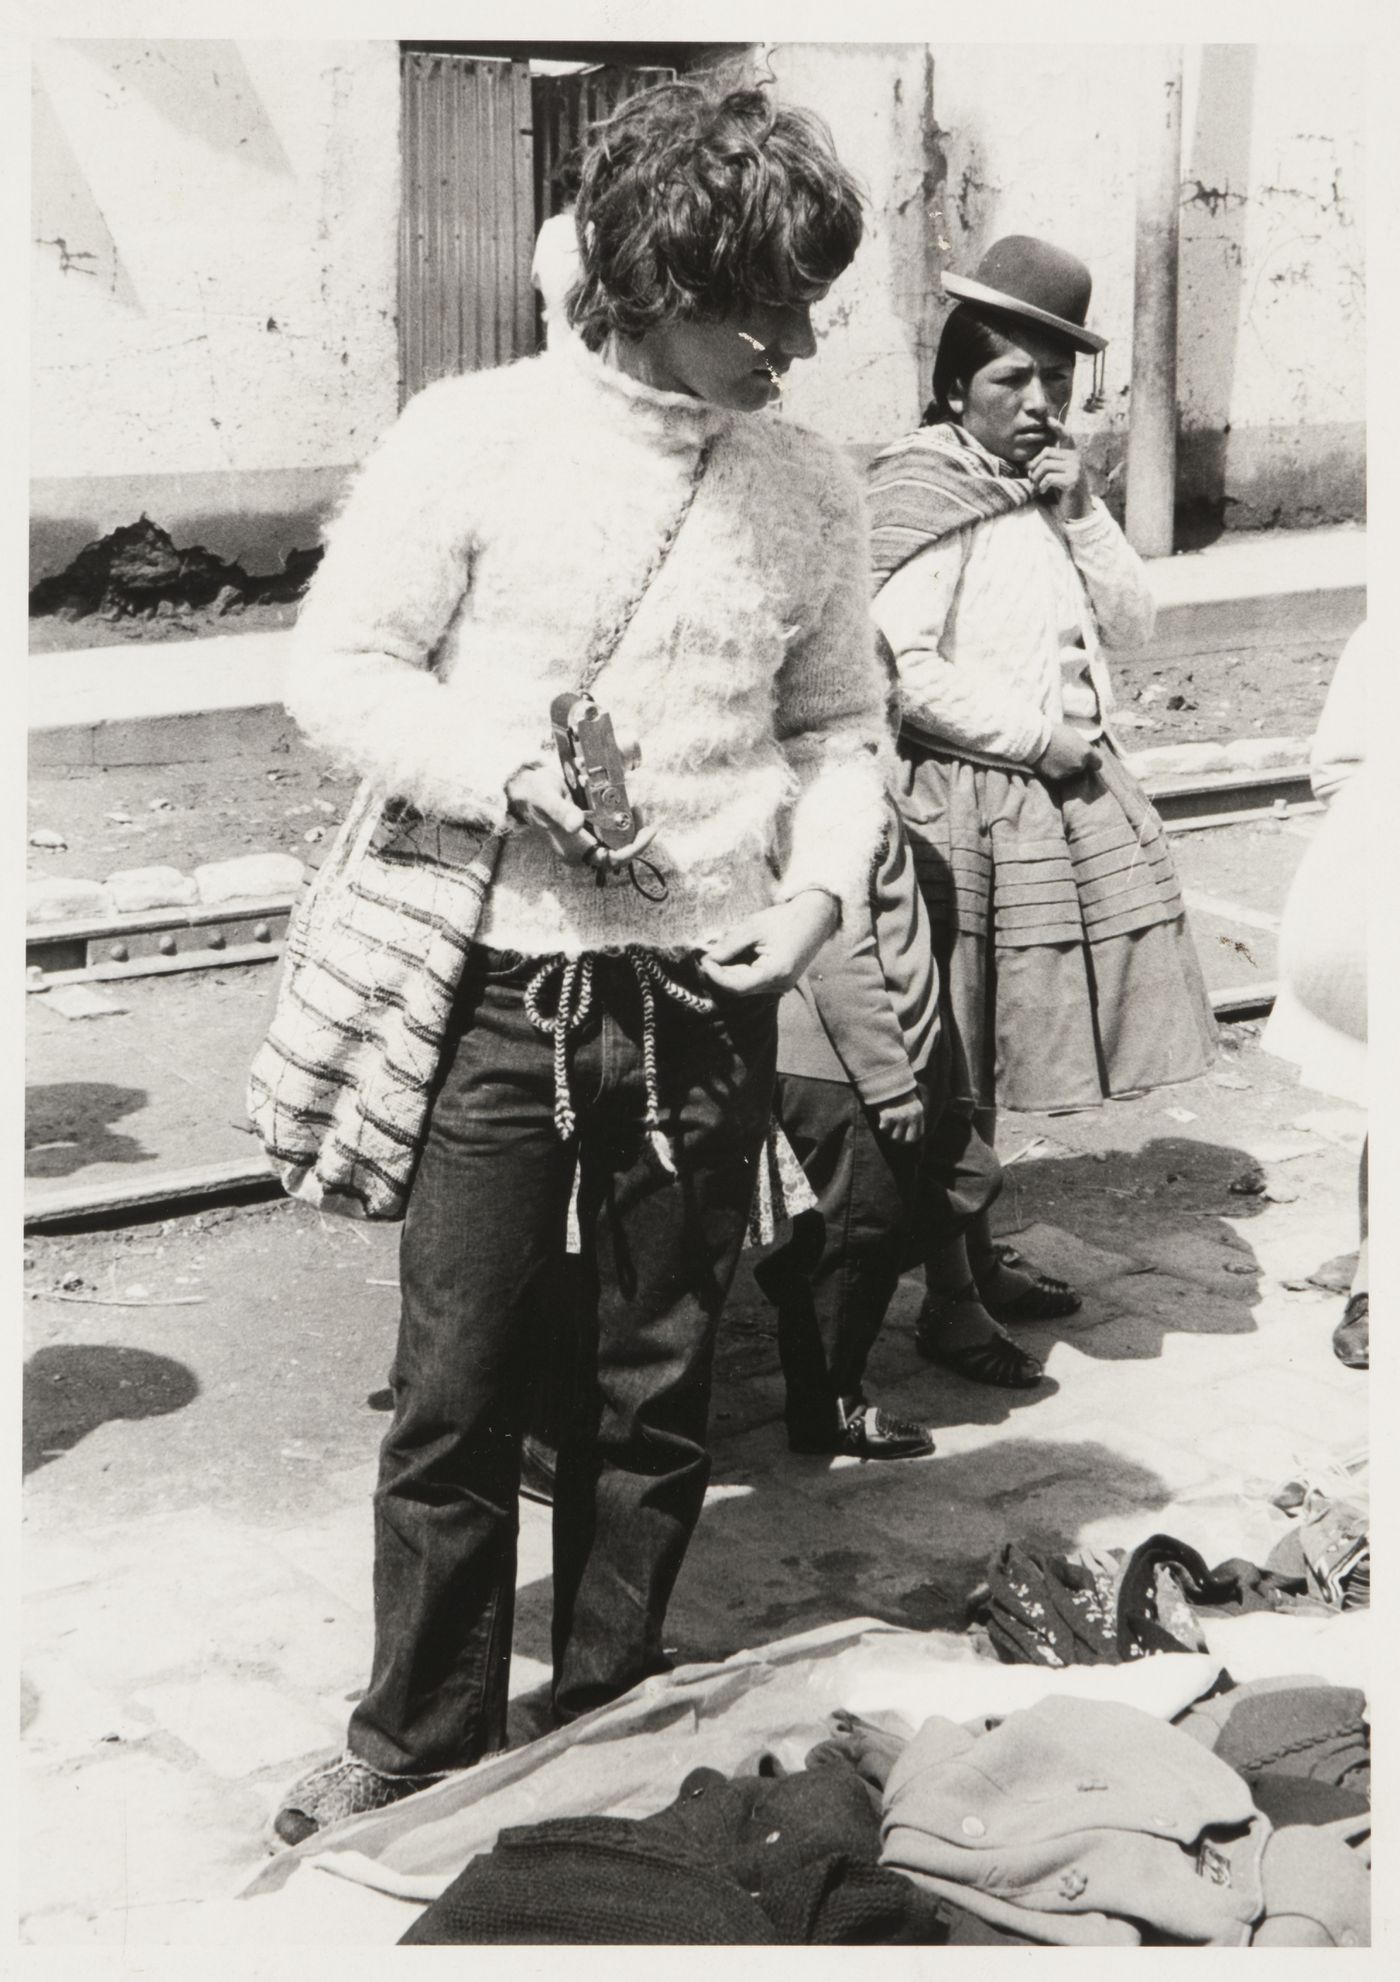 Gordon Matta-Clark holding a camera in a market, probably Peru